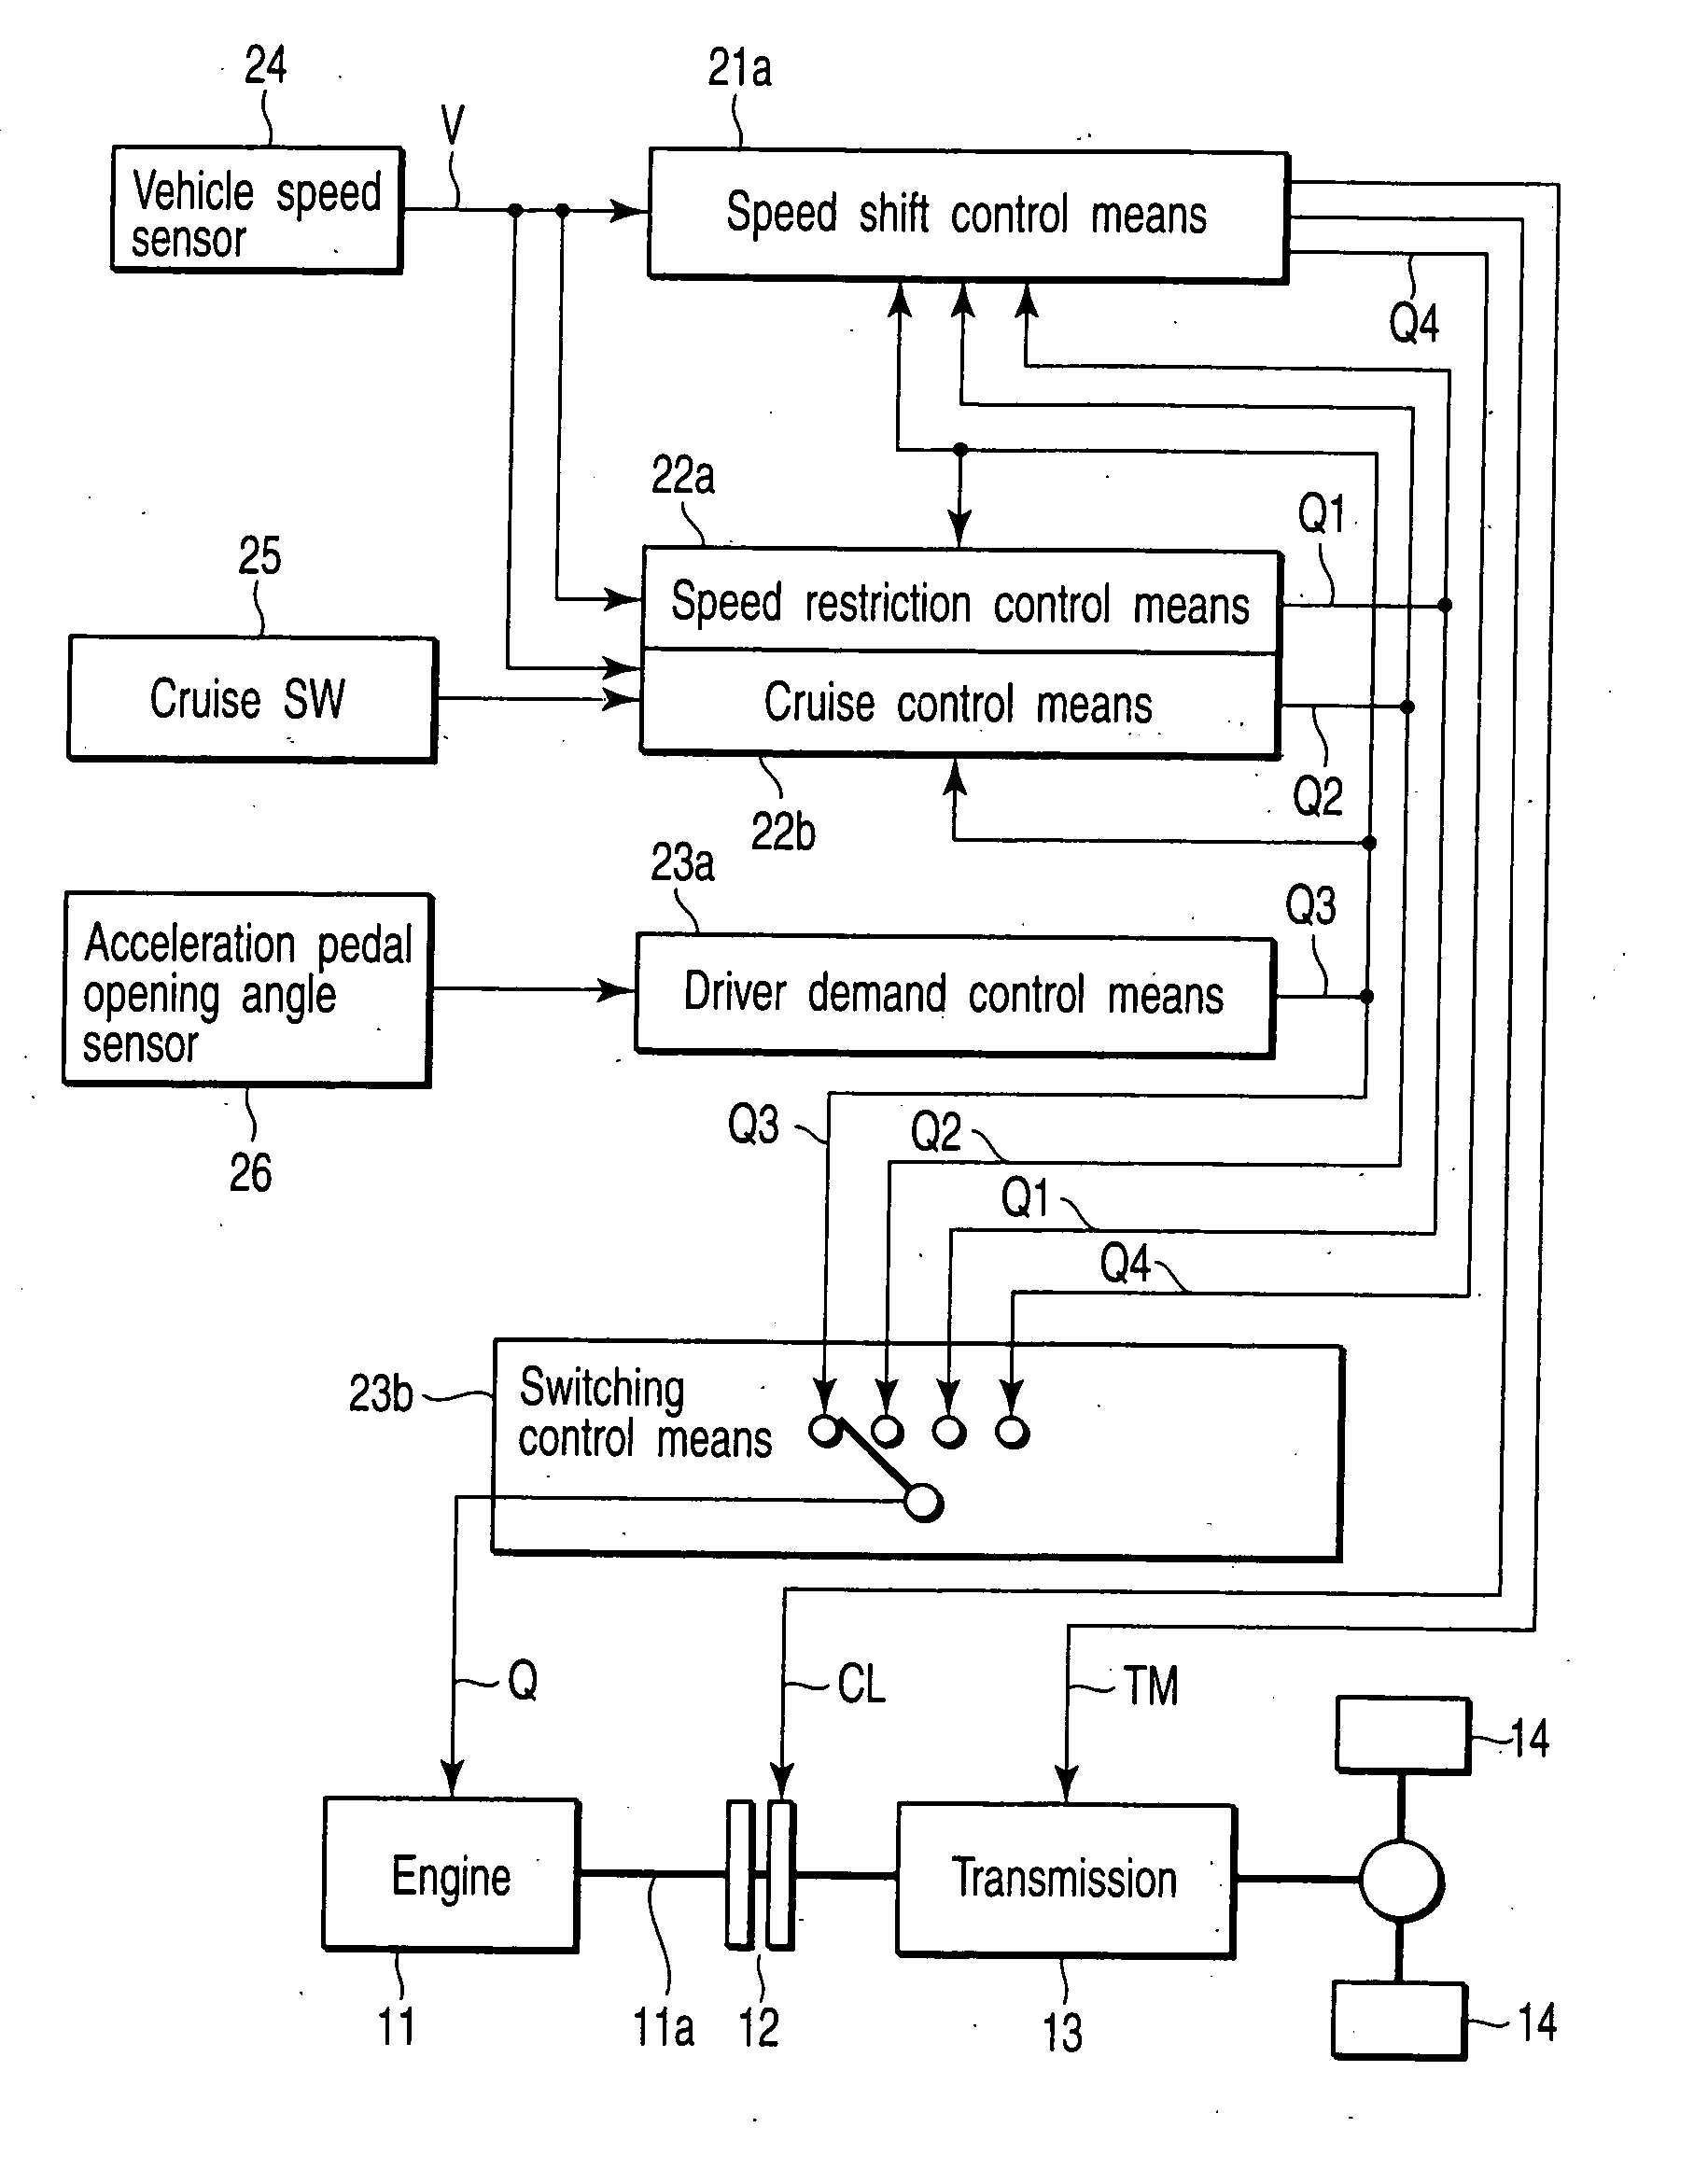 Engine output control apparatus